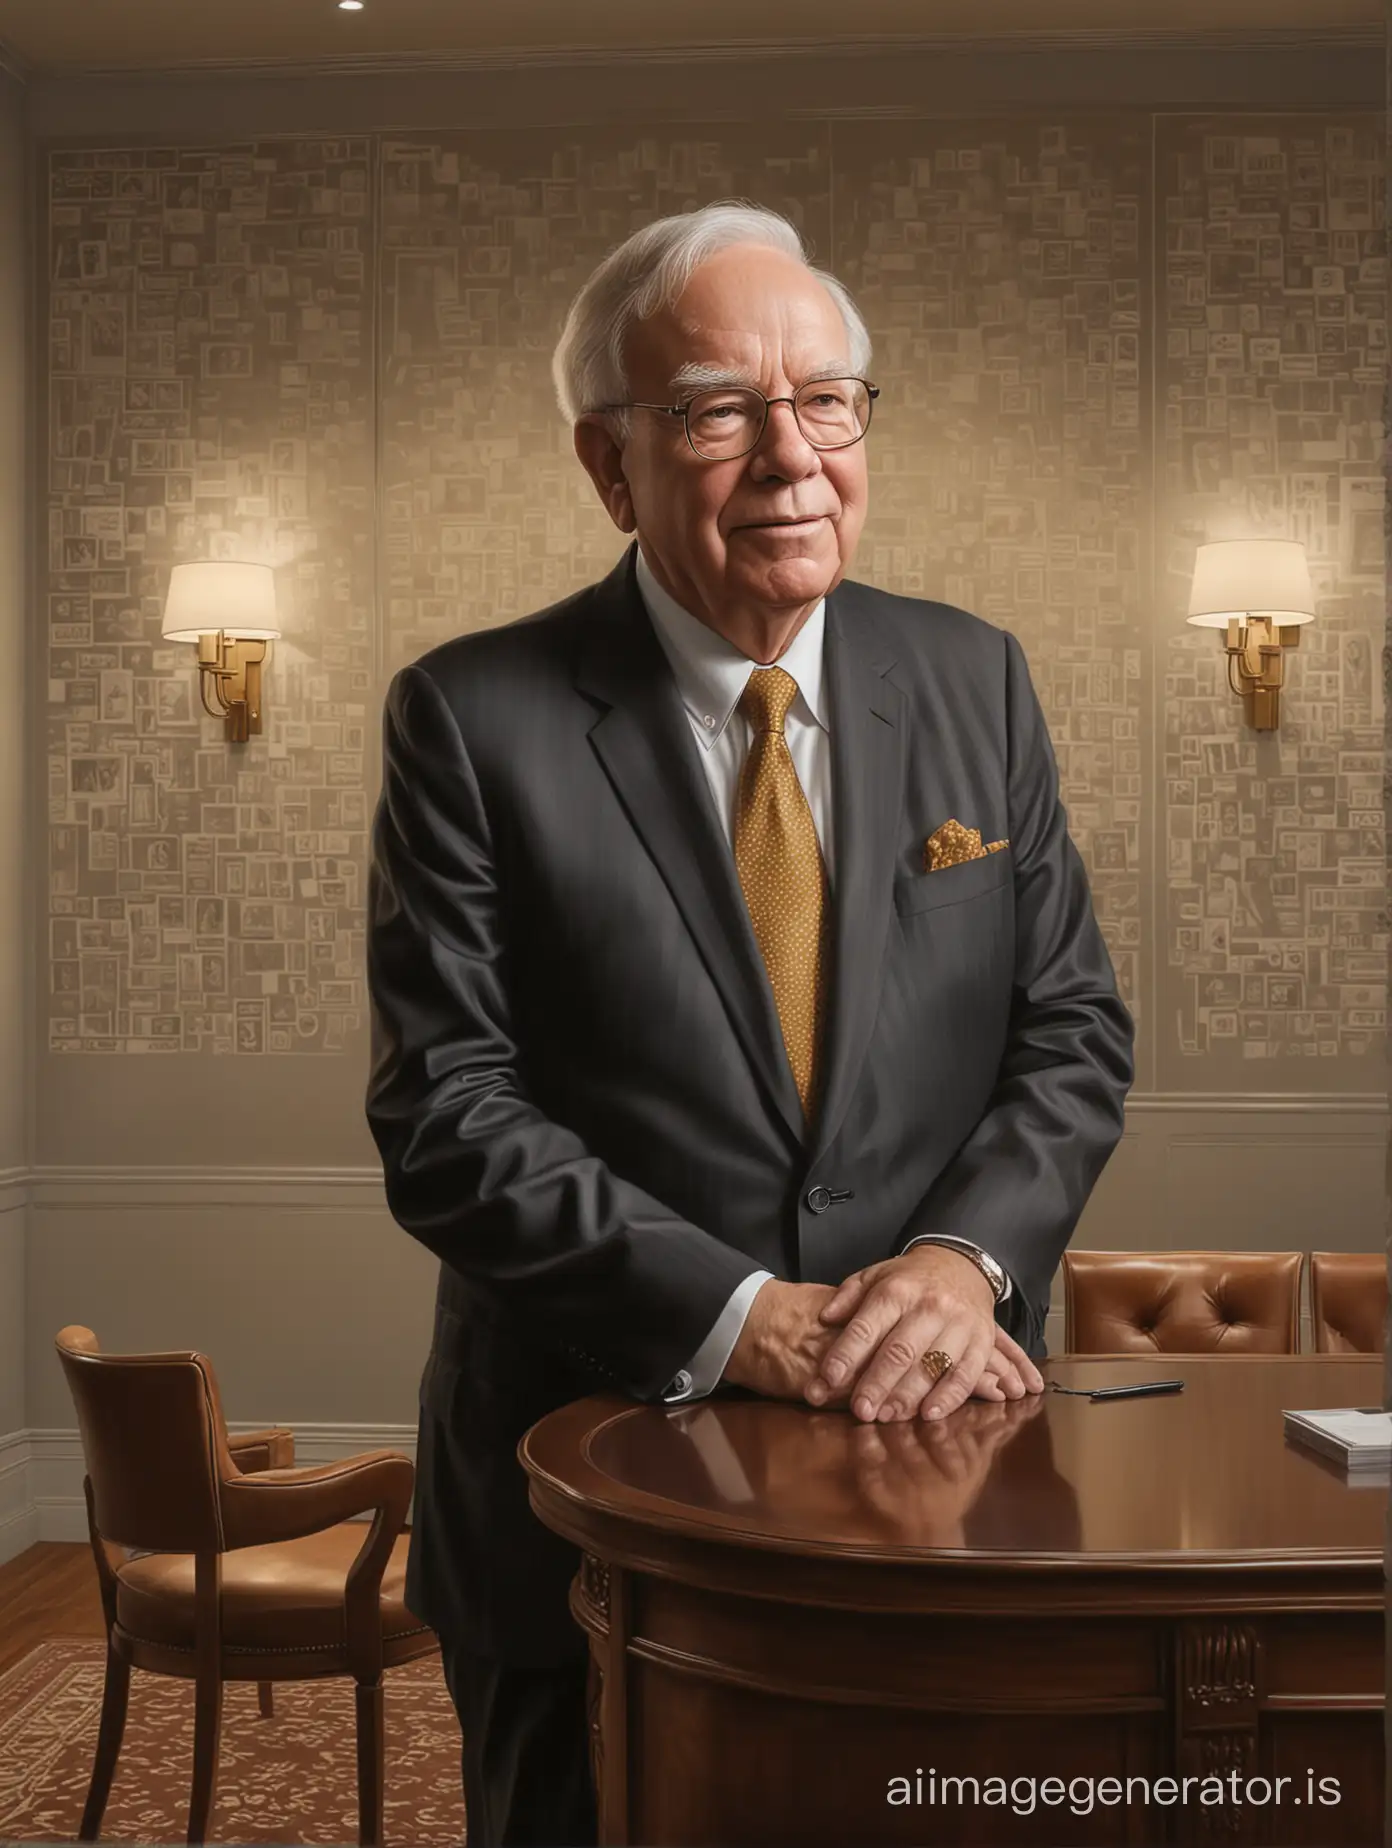 Hyper-Realistic-Mural-of-Warren-Buffet-in-Elegant-Study-Conversation